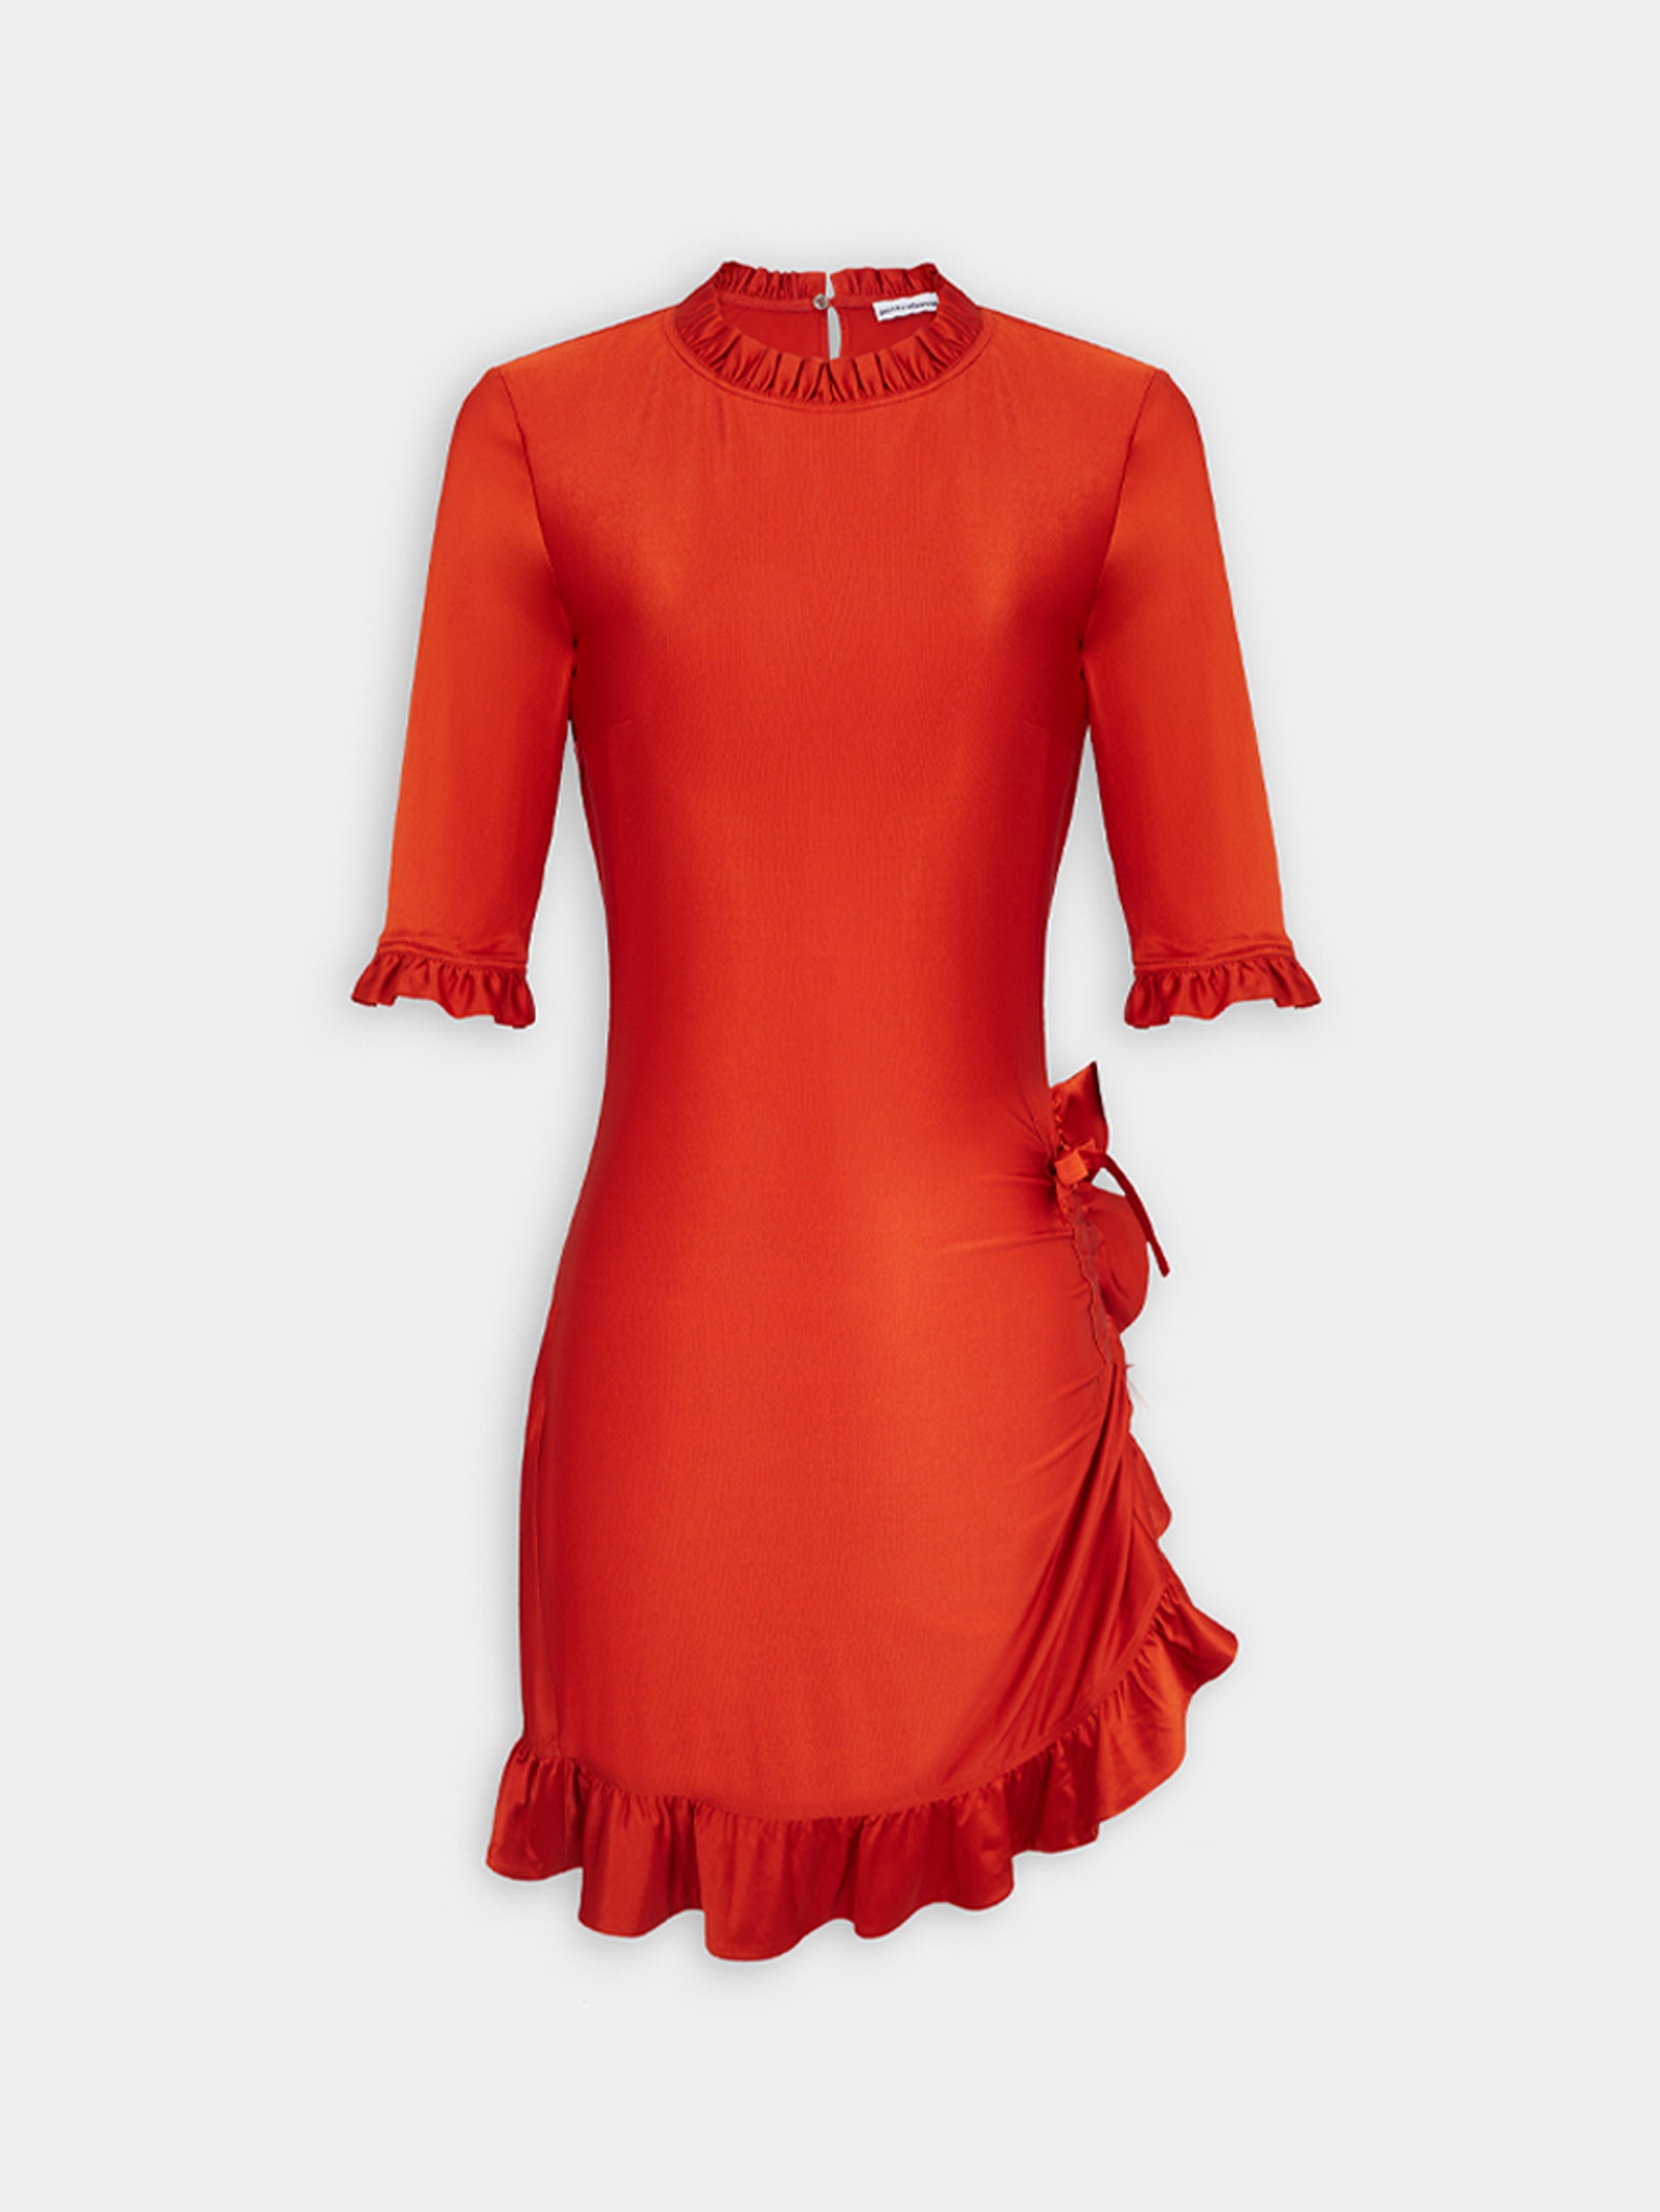 RED SHORT FLAMENCO DRESS IN JERSEY